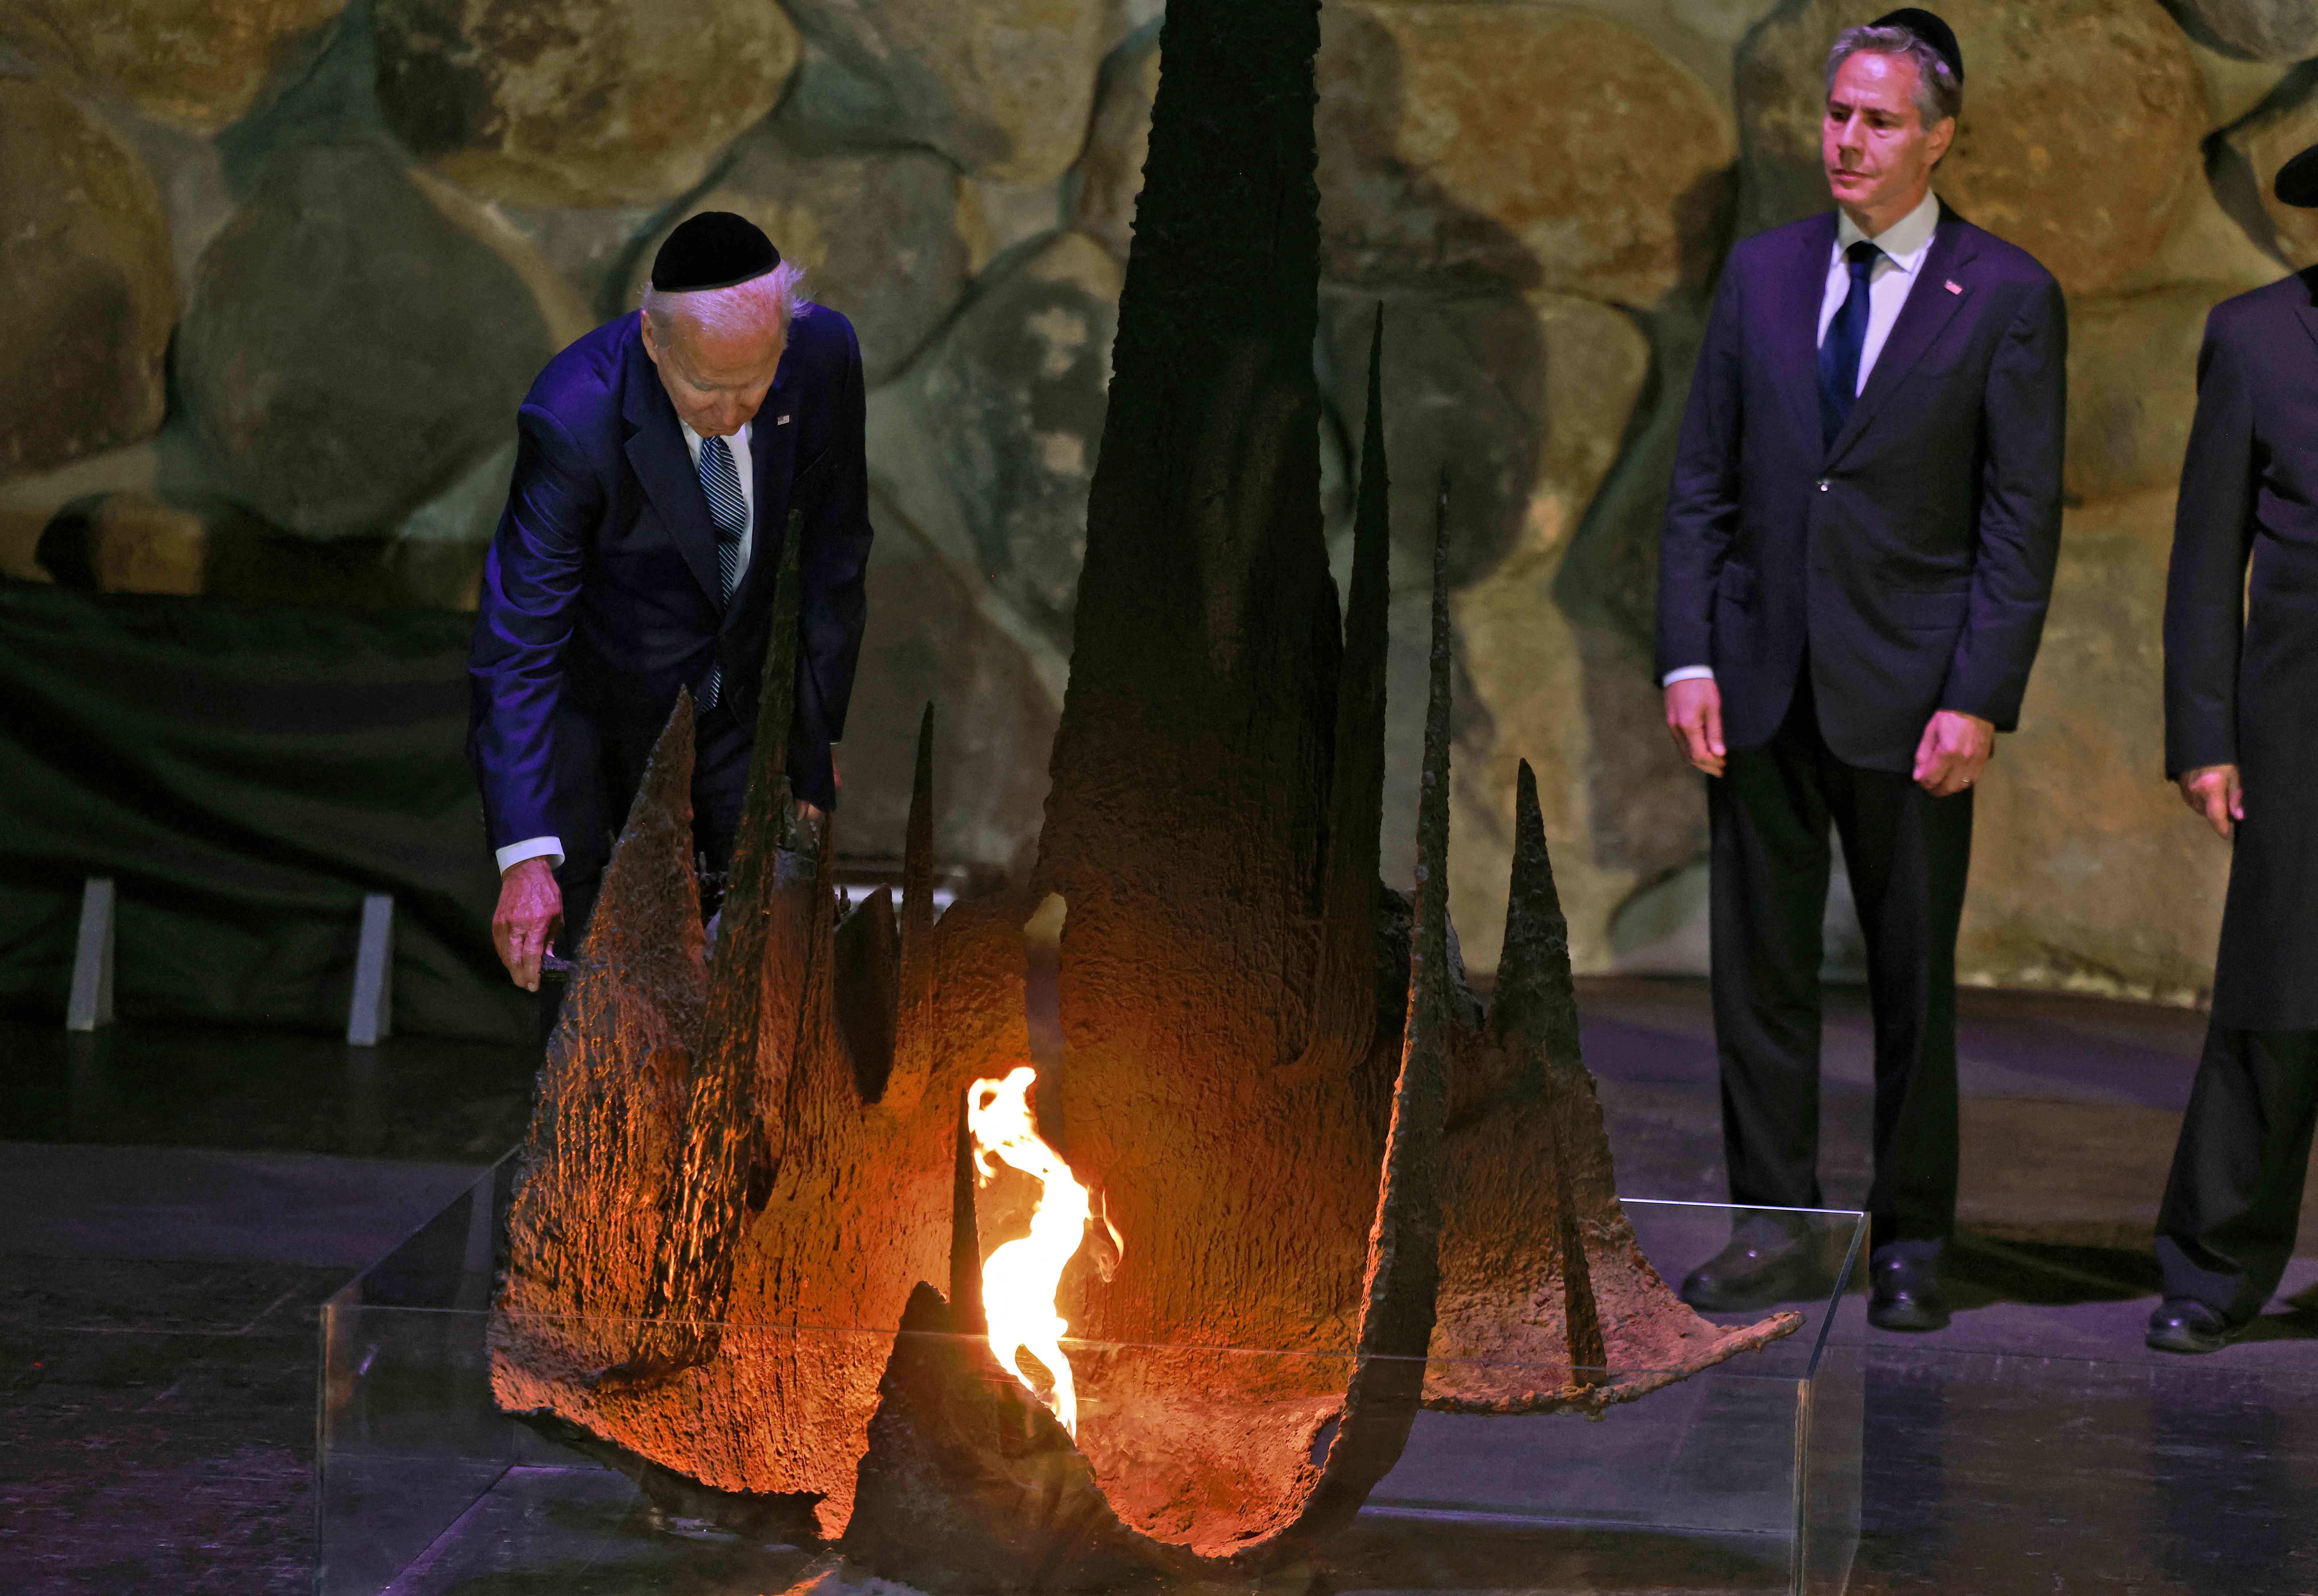 President Joe Biden rekindles the Eternal Flame at the Hall of Remembrance at the Yad Vashem Holocaust Memorial museum as Secretary of State Antony Blinken looks on